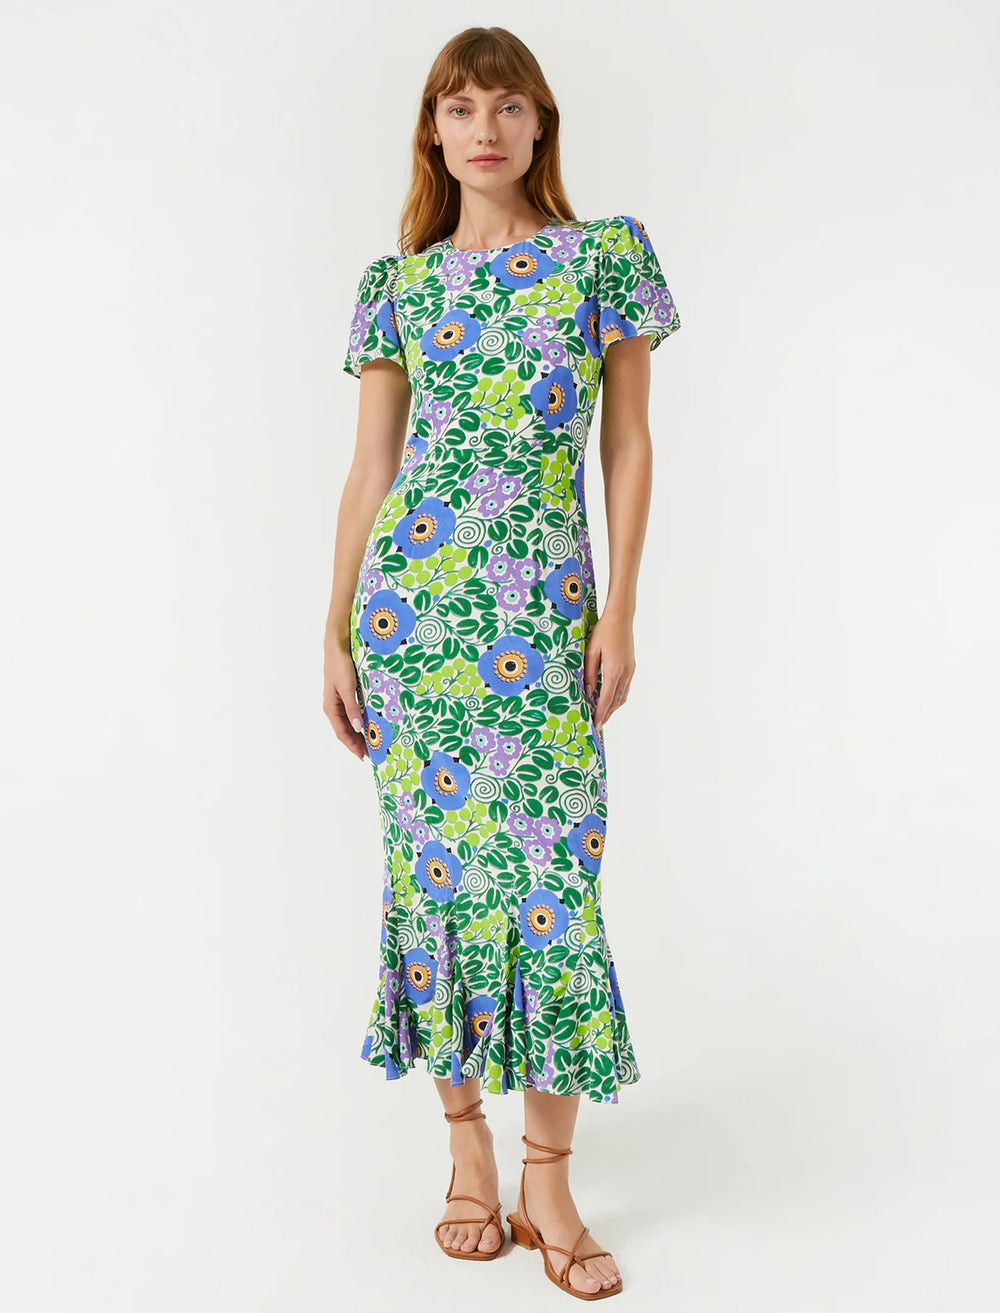 Model wearing Rhode's lulani dress in wisteria aura blossom.